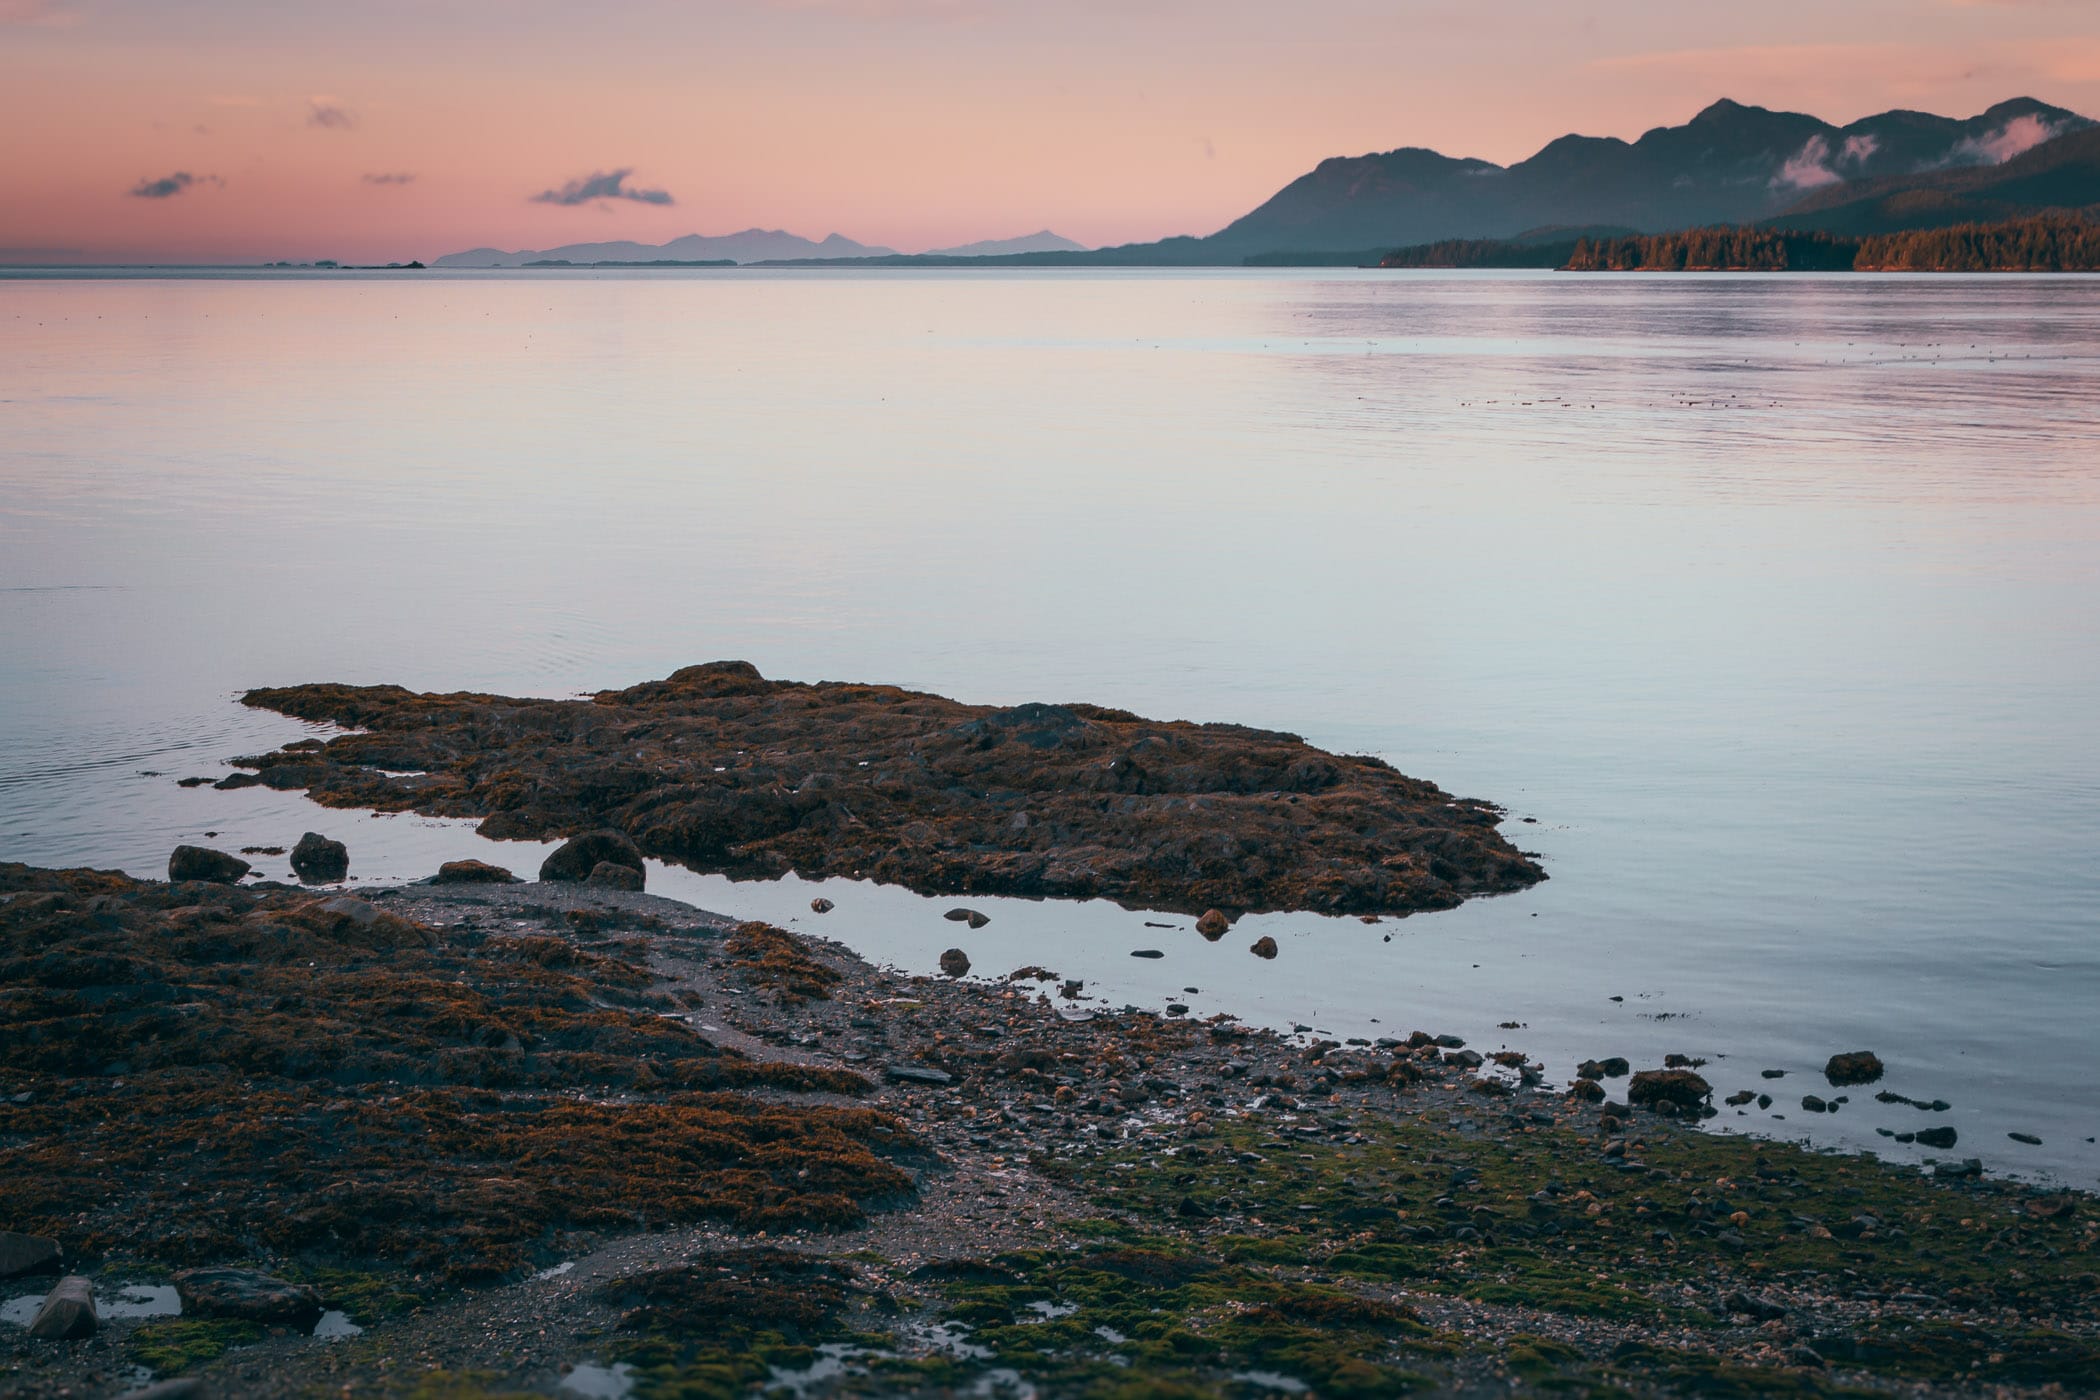 The first light of dawn illuminates the Tongass Narrows at Ketchikan, Alaska.